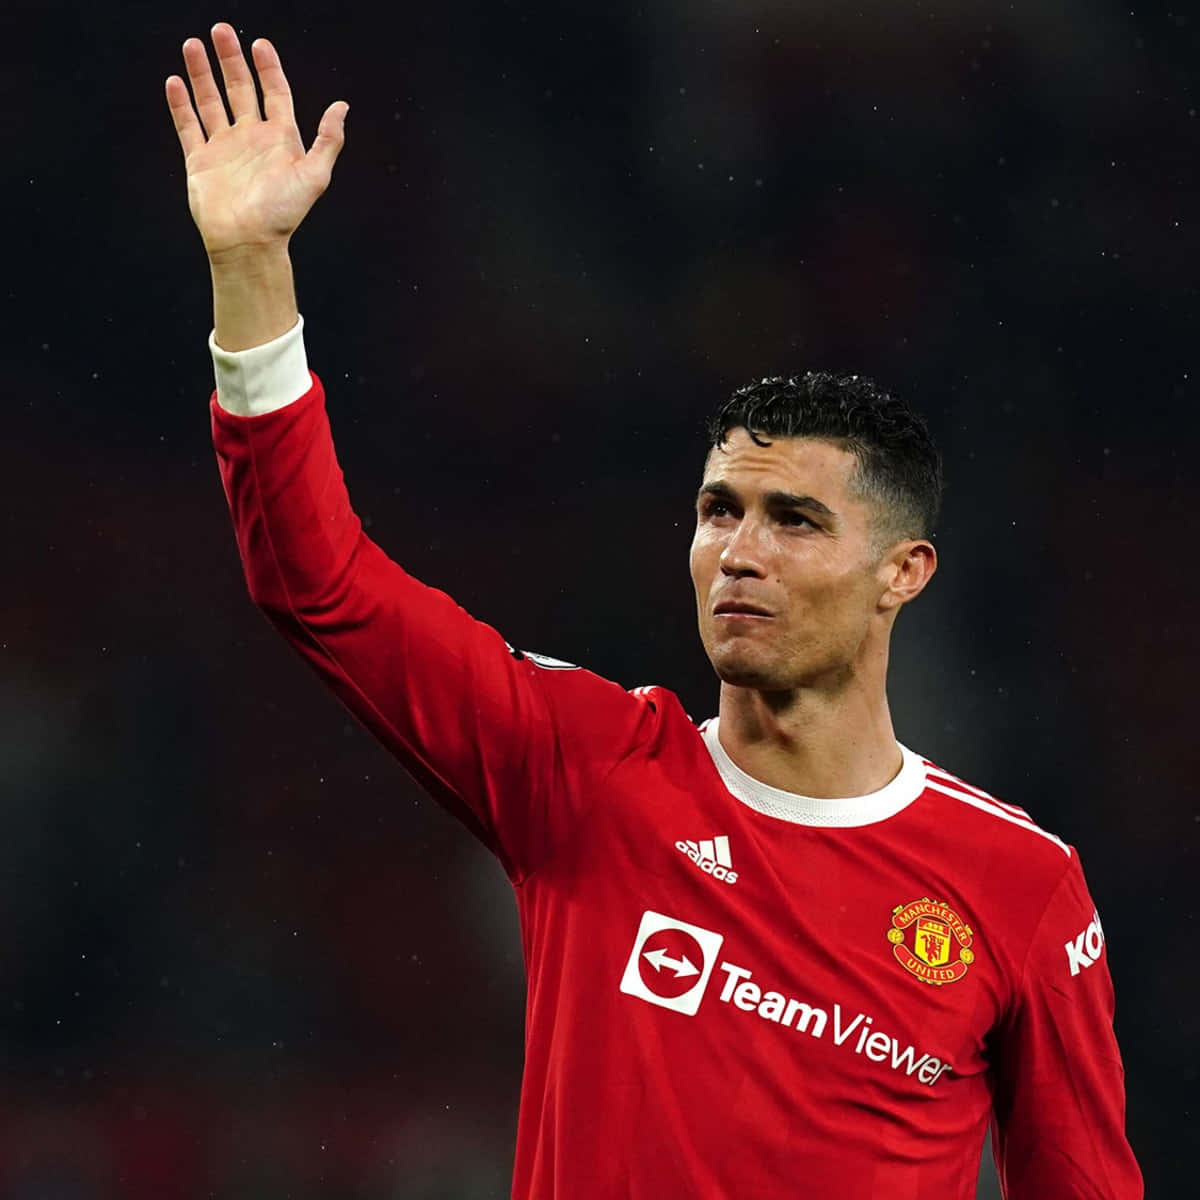 Soccer Star Cristiano Ronaldo Celebrating After Scoring a Goal